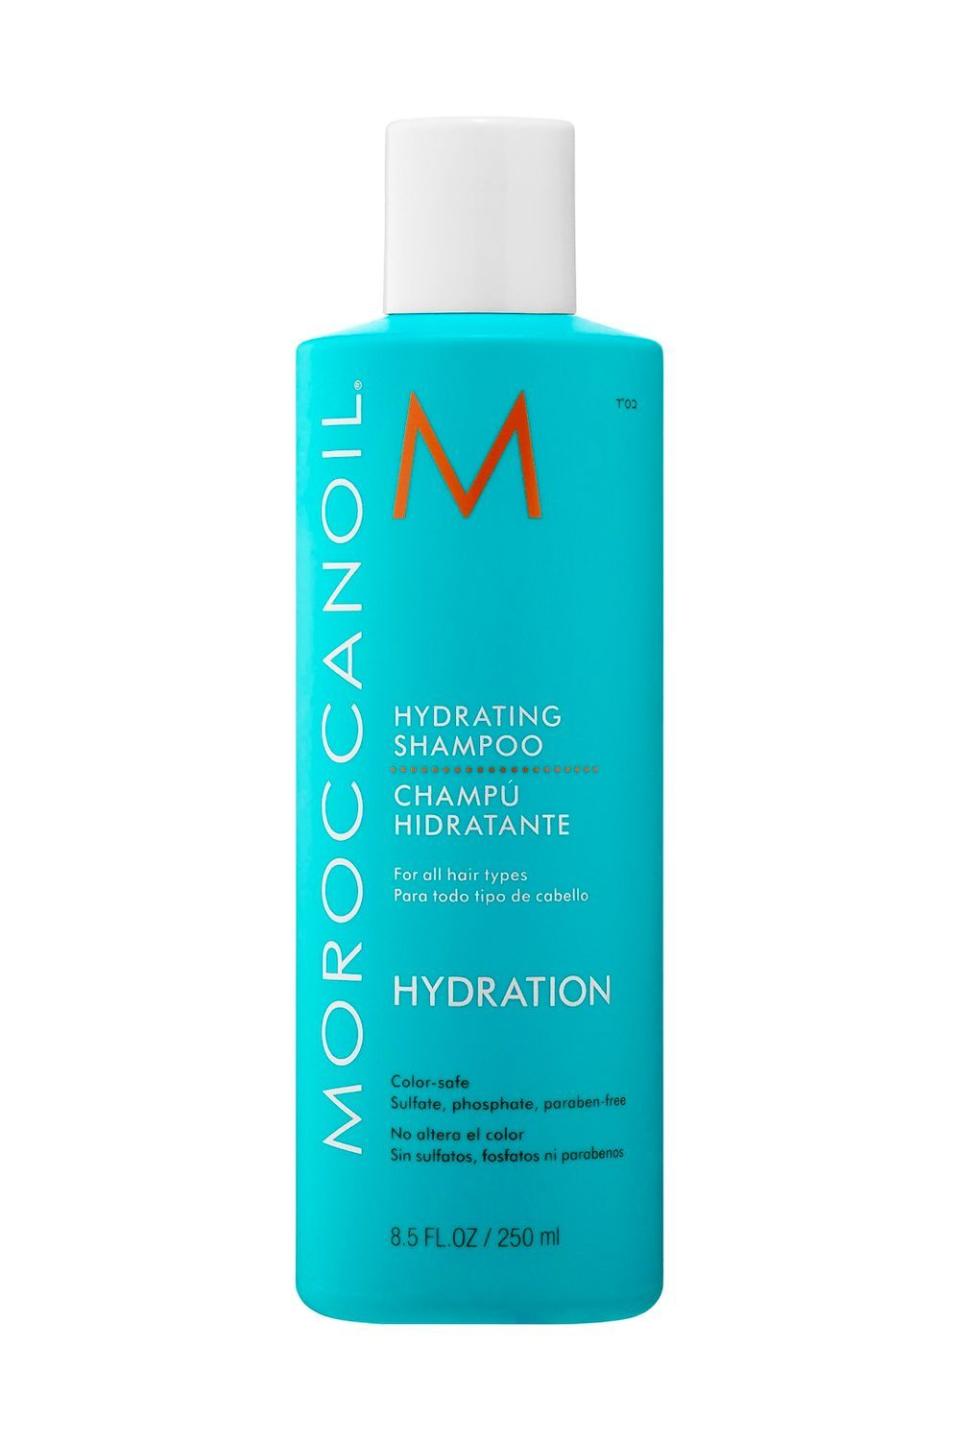 3) Moroccanoil Hydrating Shampoo